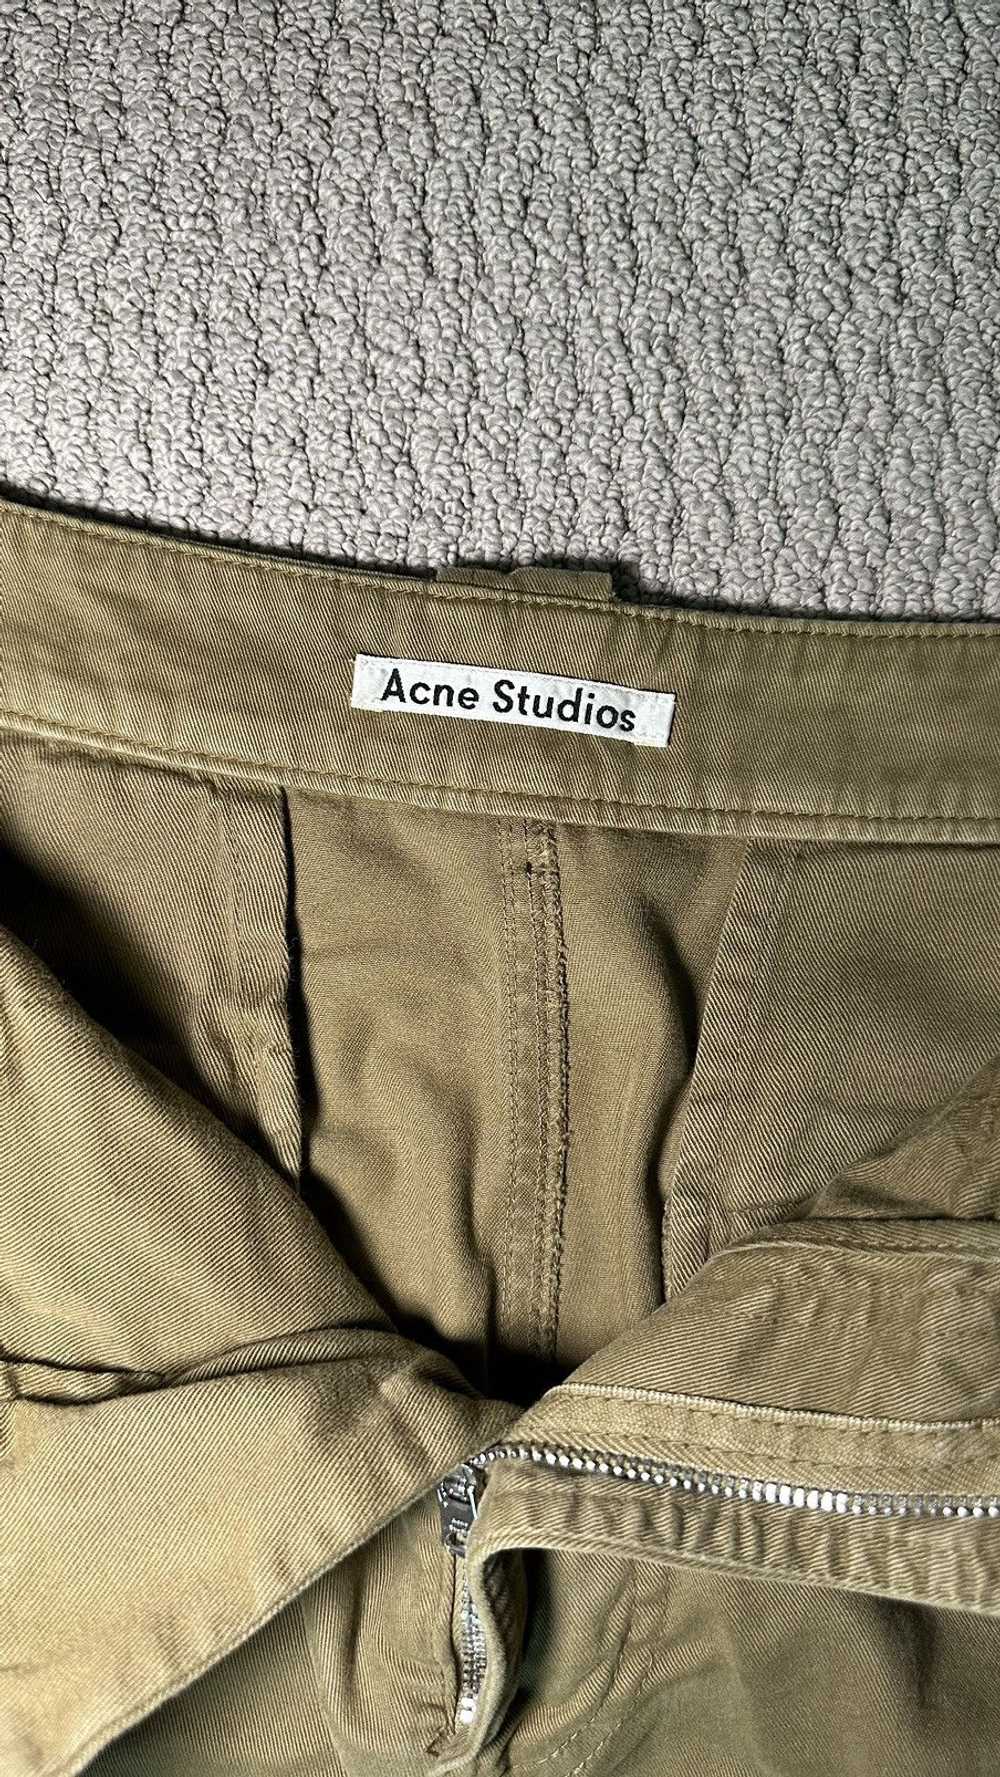 Acne Studios Acne Studios Olive Green Cargo Pants - image 6